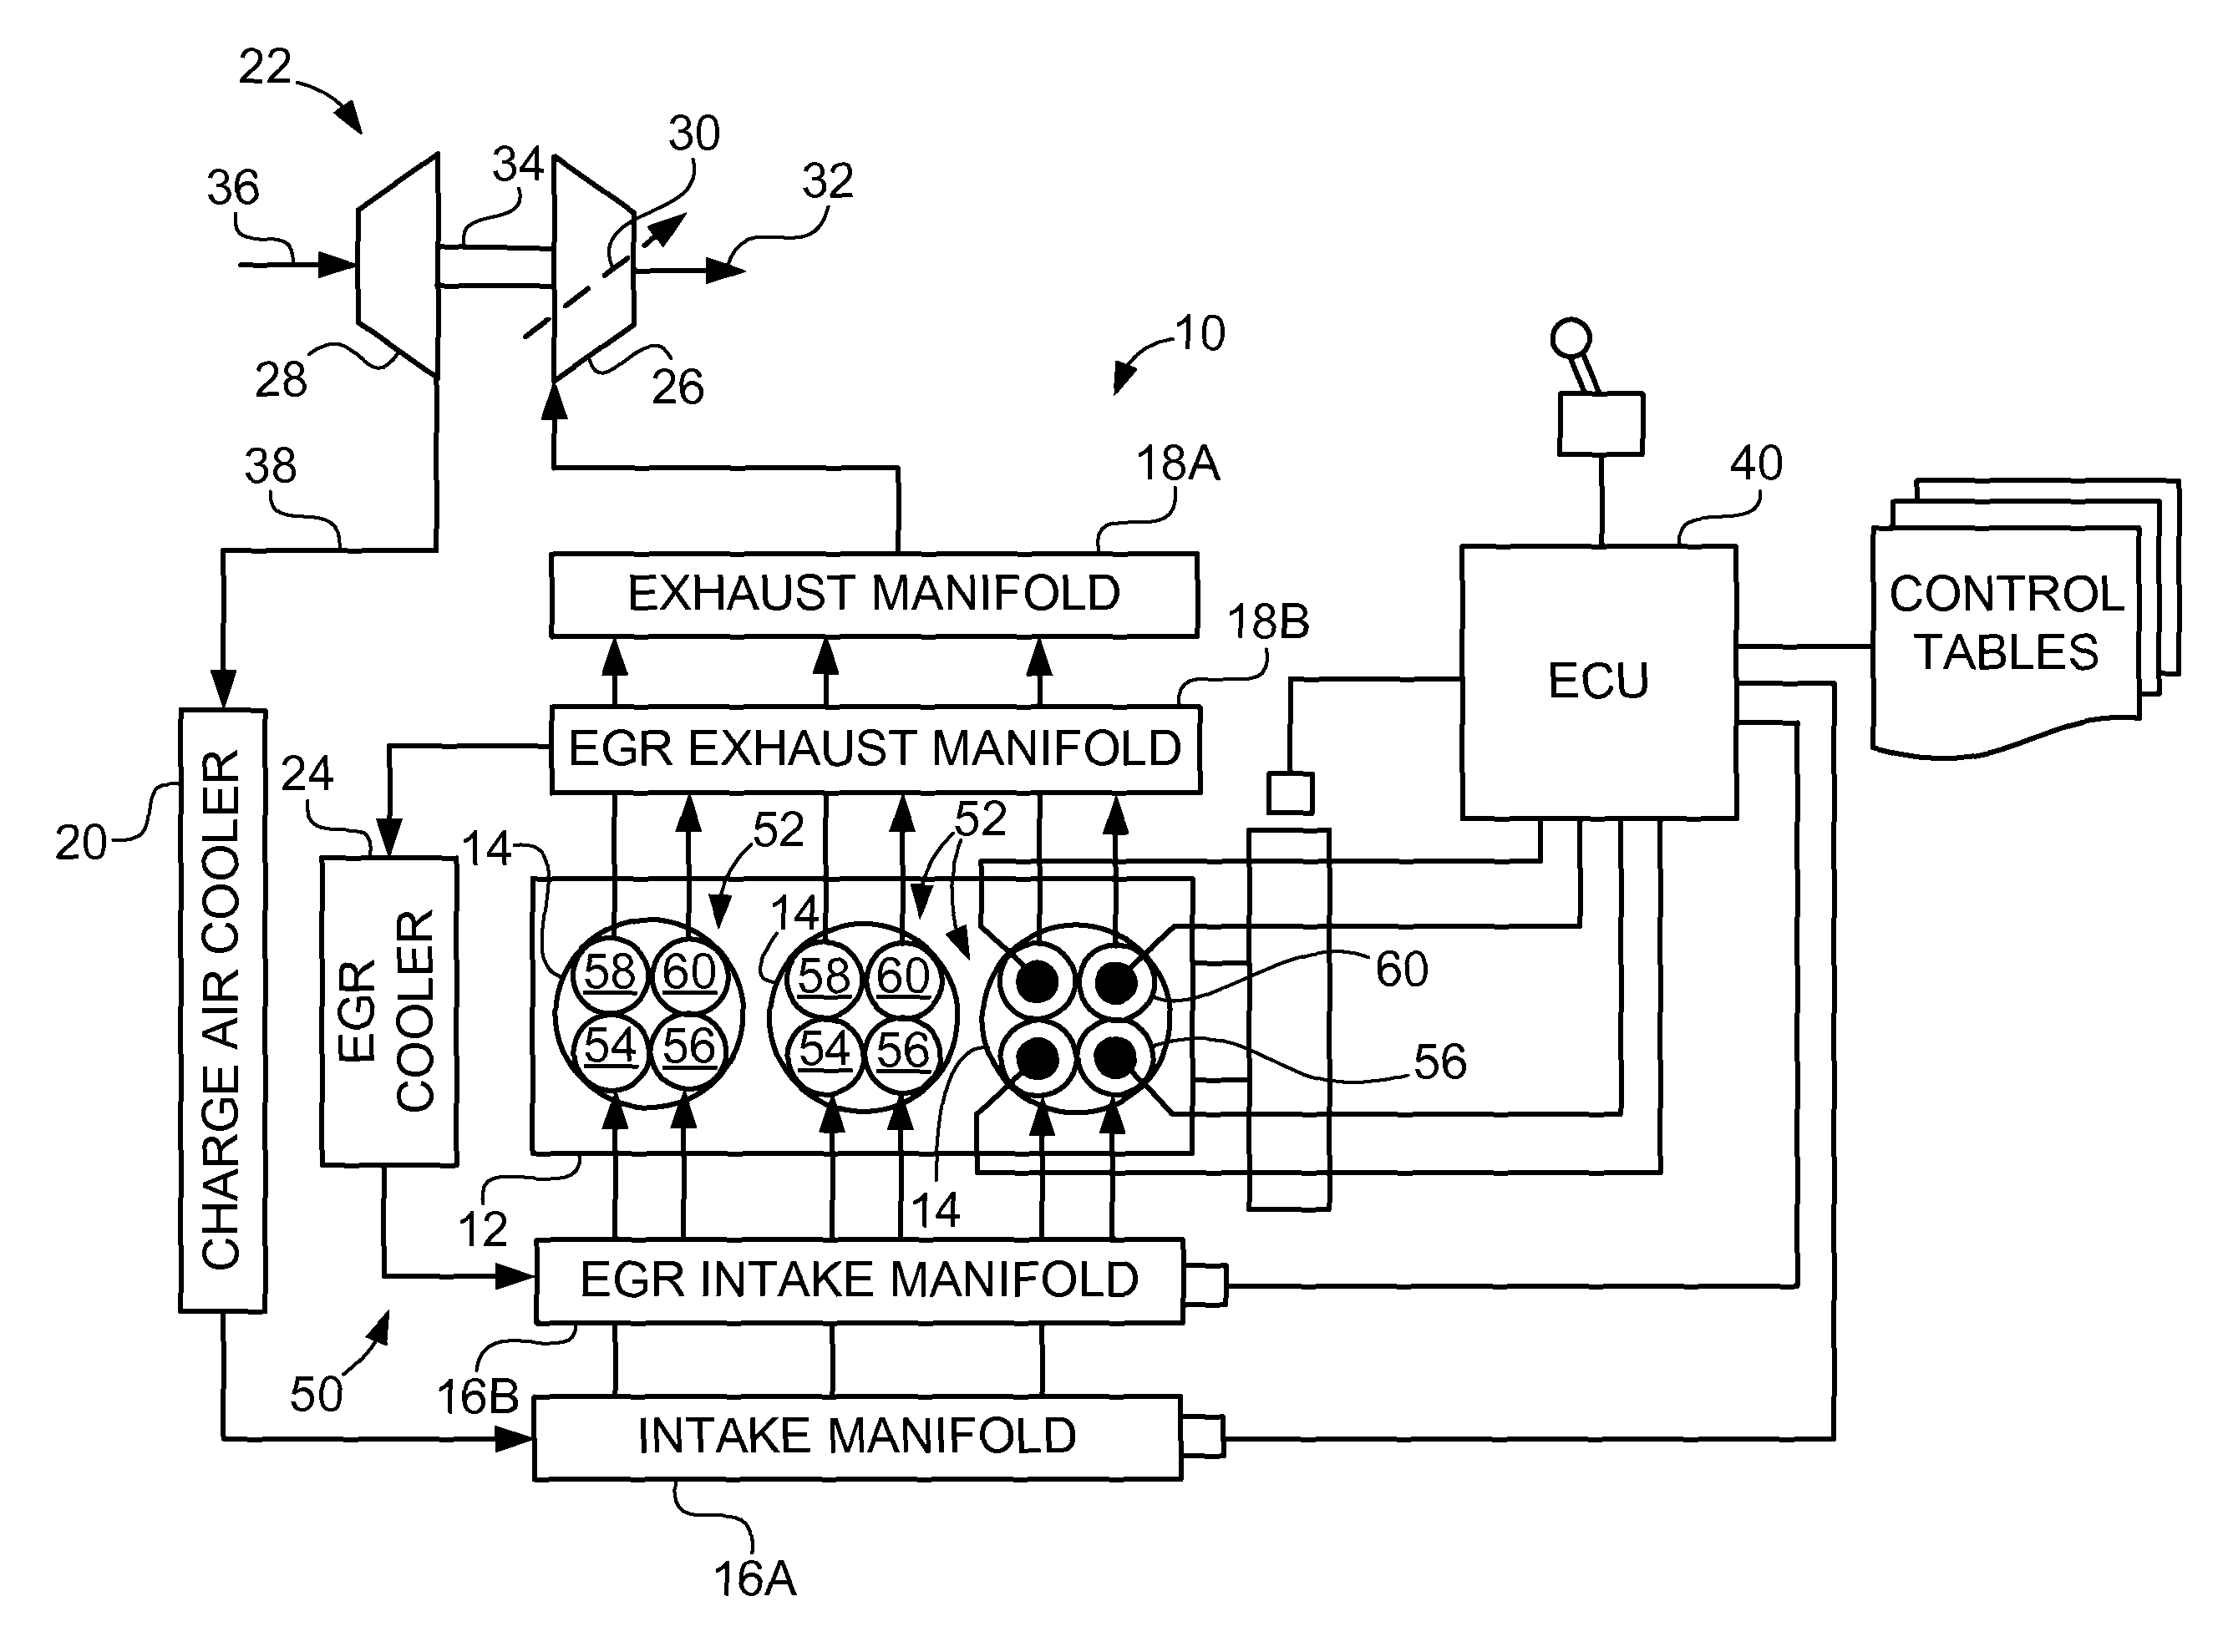 EGR system for an internal combustion engine